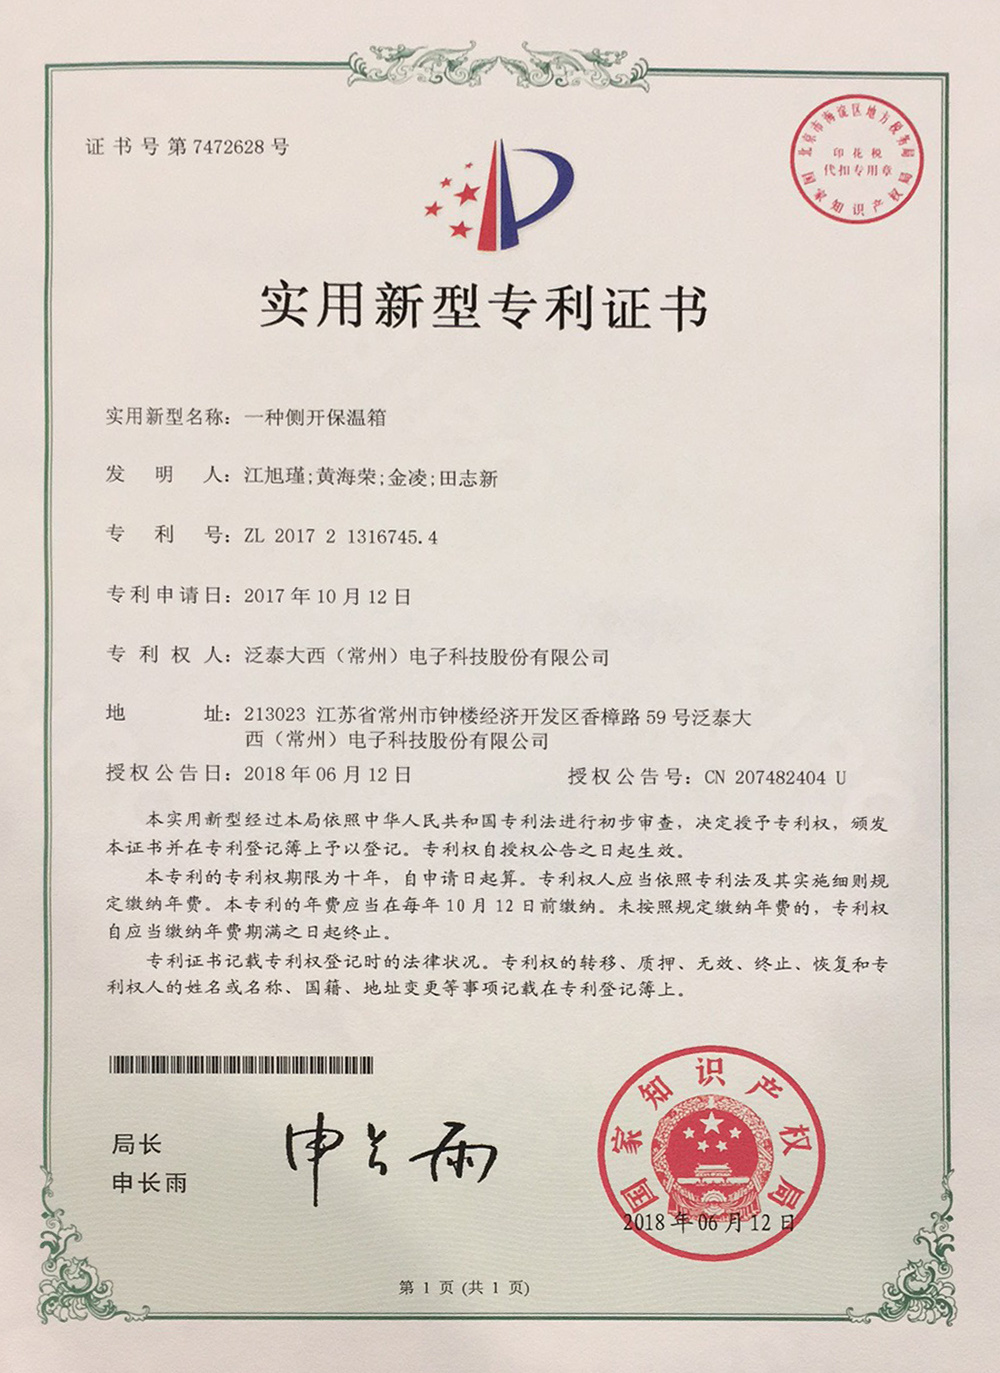 A side open incubator patent certificate